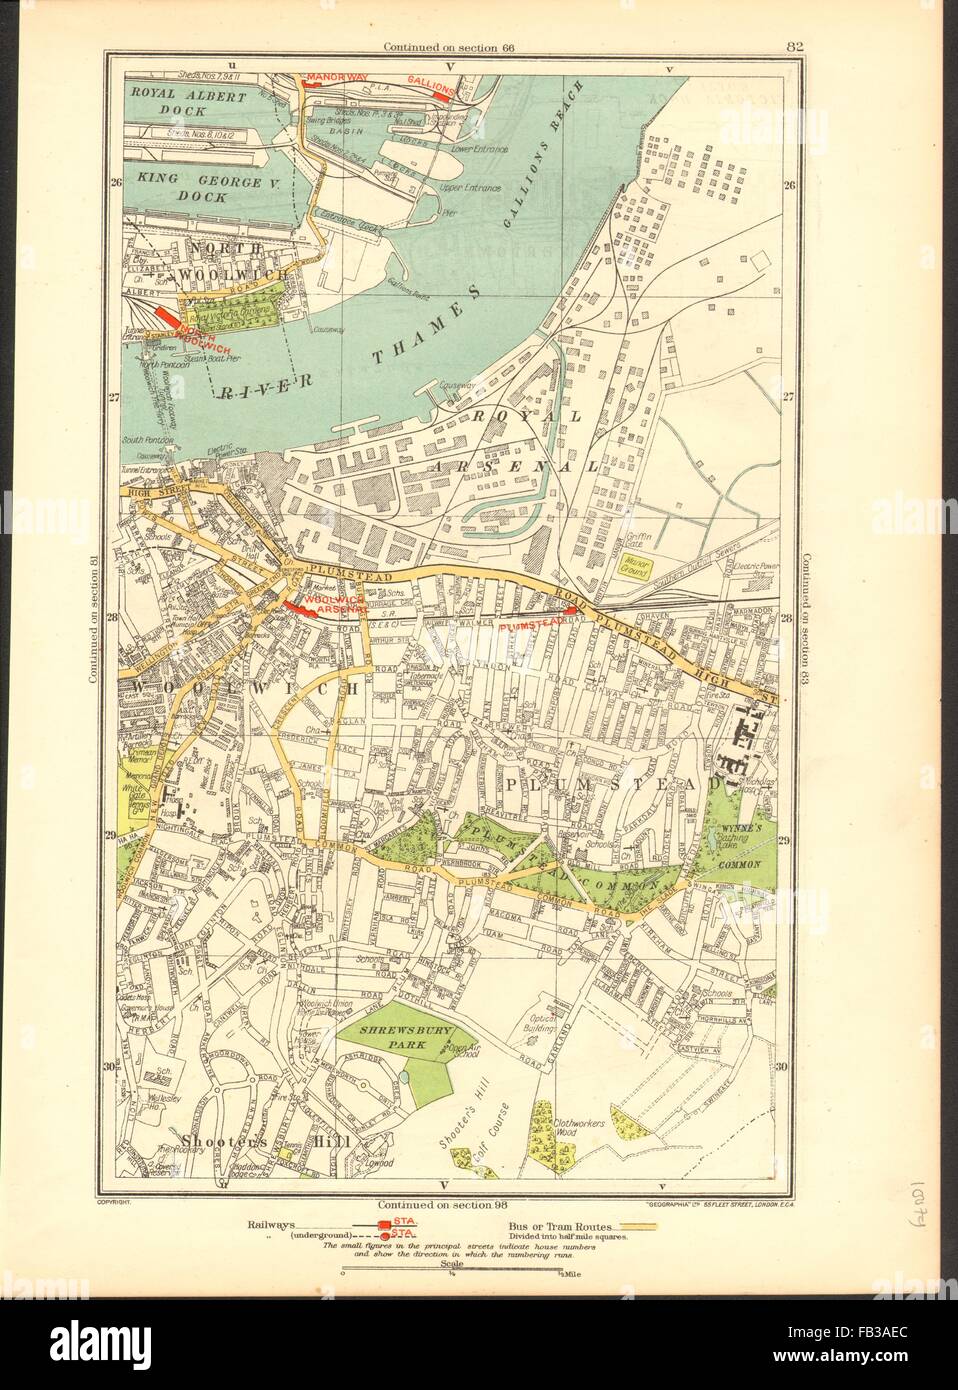 Londra: North Woolwich,Plumstead,Gallions,Manor modo,Woolwich Arsenal, 1937 Mappa Foto Stock